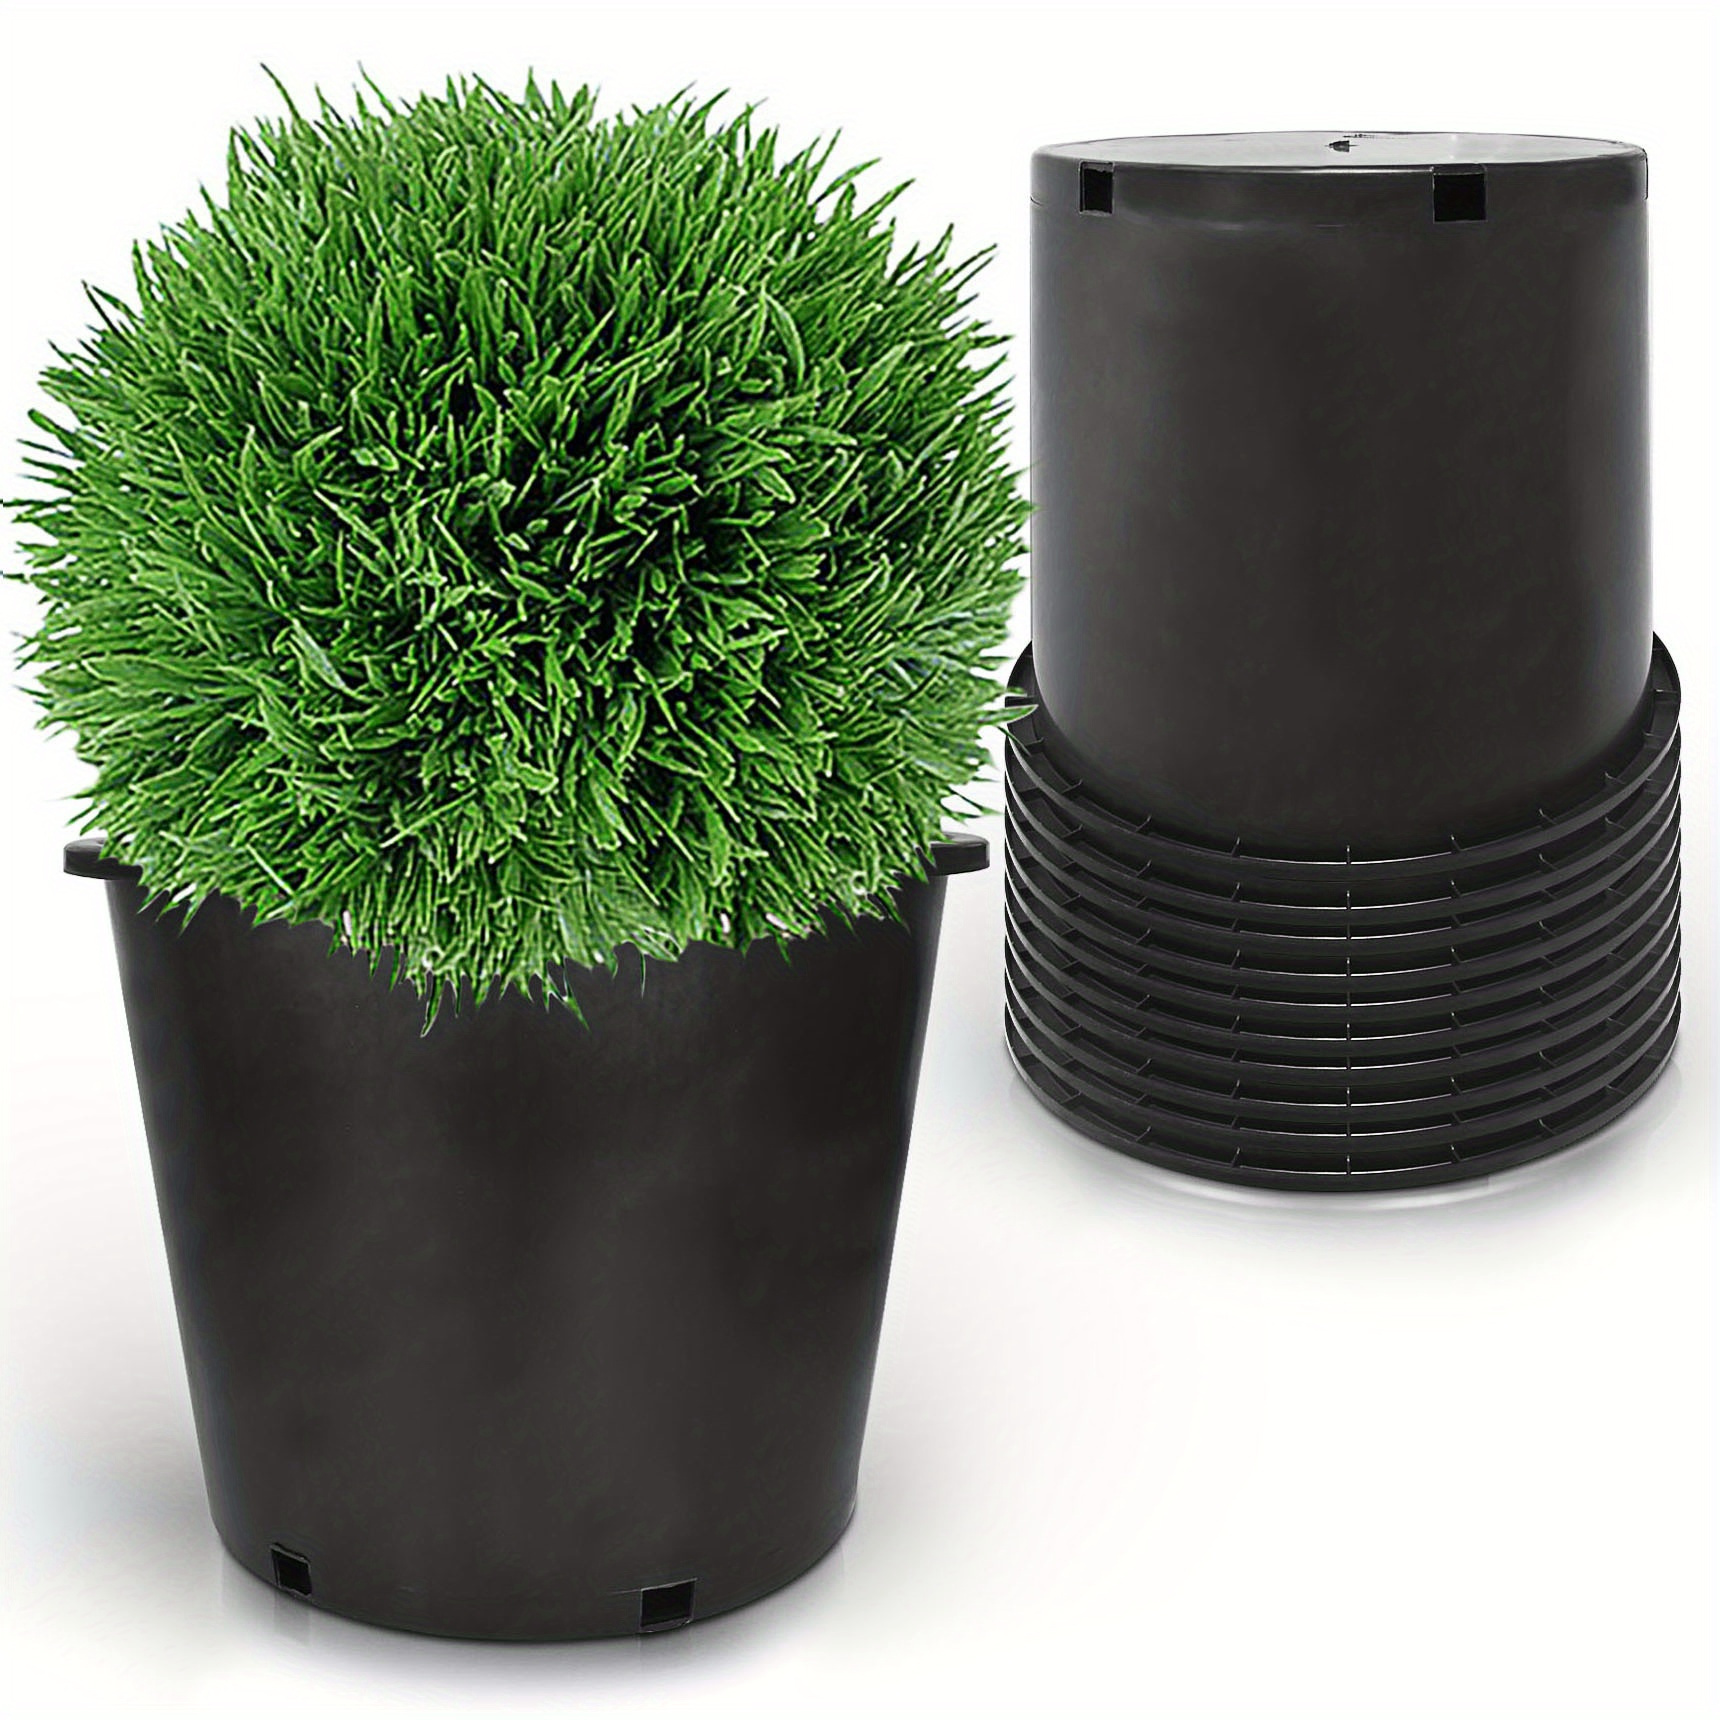 

10 Pack 7 Gallon Premium Black Nursery Pot Plant Container Garden Planter Pots For Indoor Outdoor Plants Seedlings Flowers Vegetables Seedling Cuttings